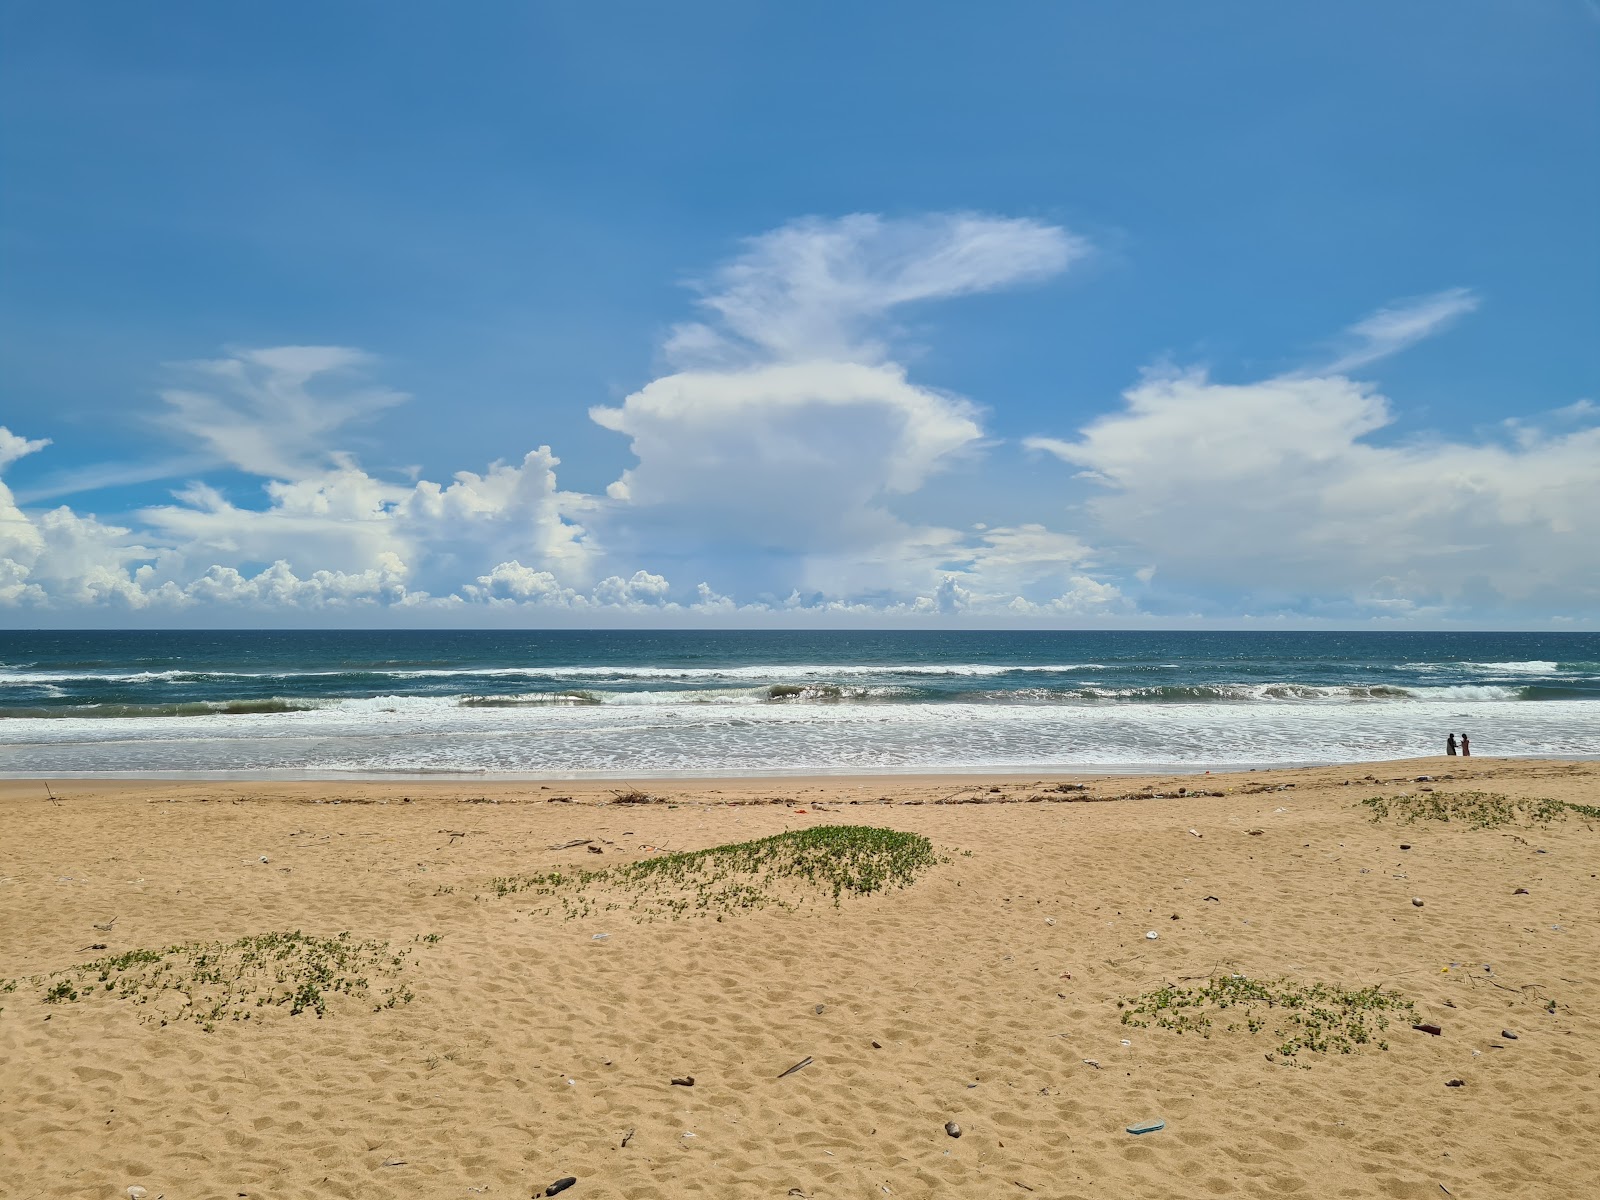 Foto di Lovapalle Beach ubicato in zona naturale